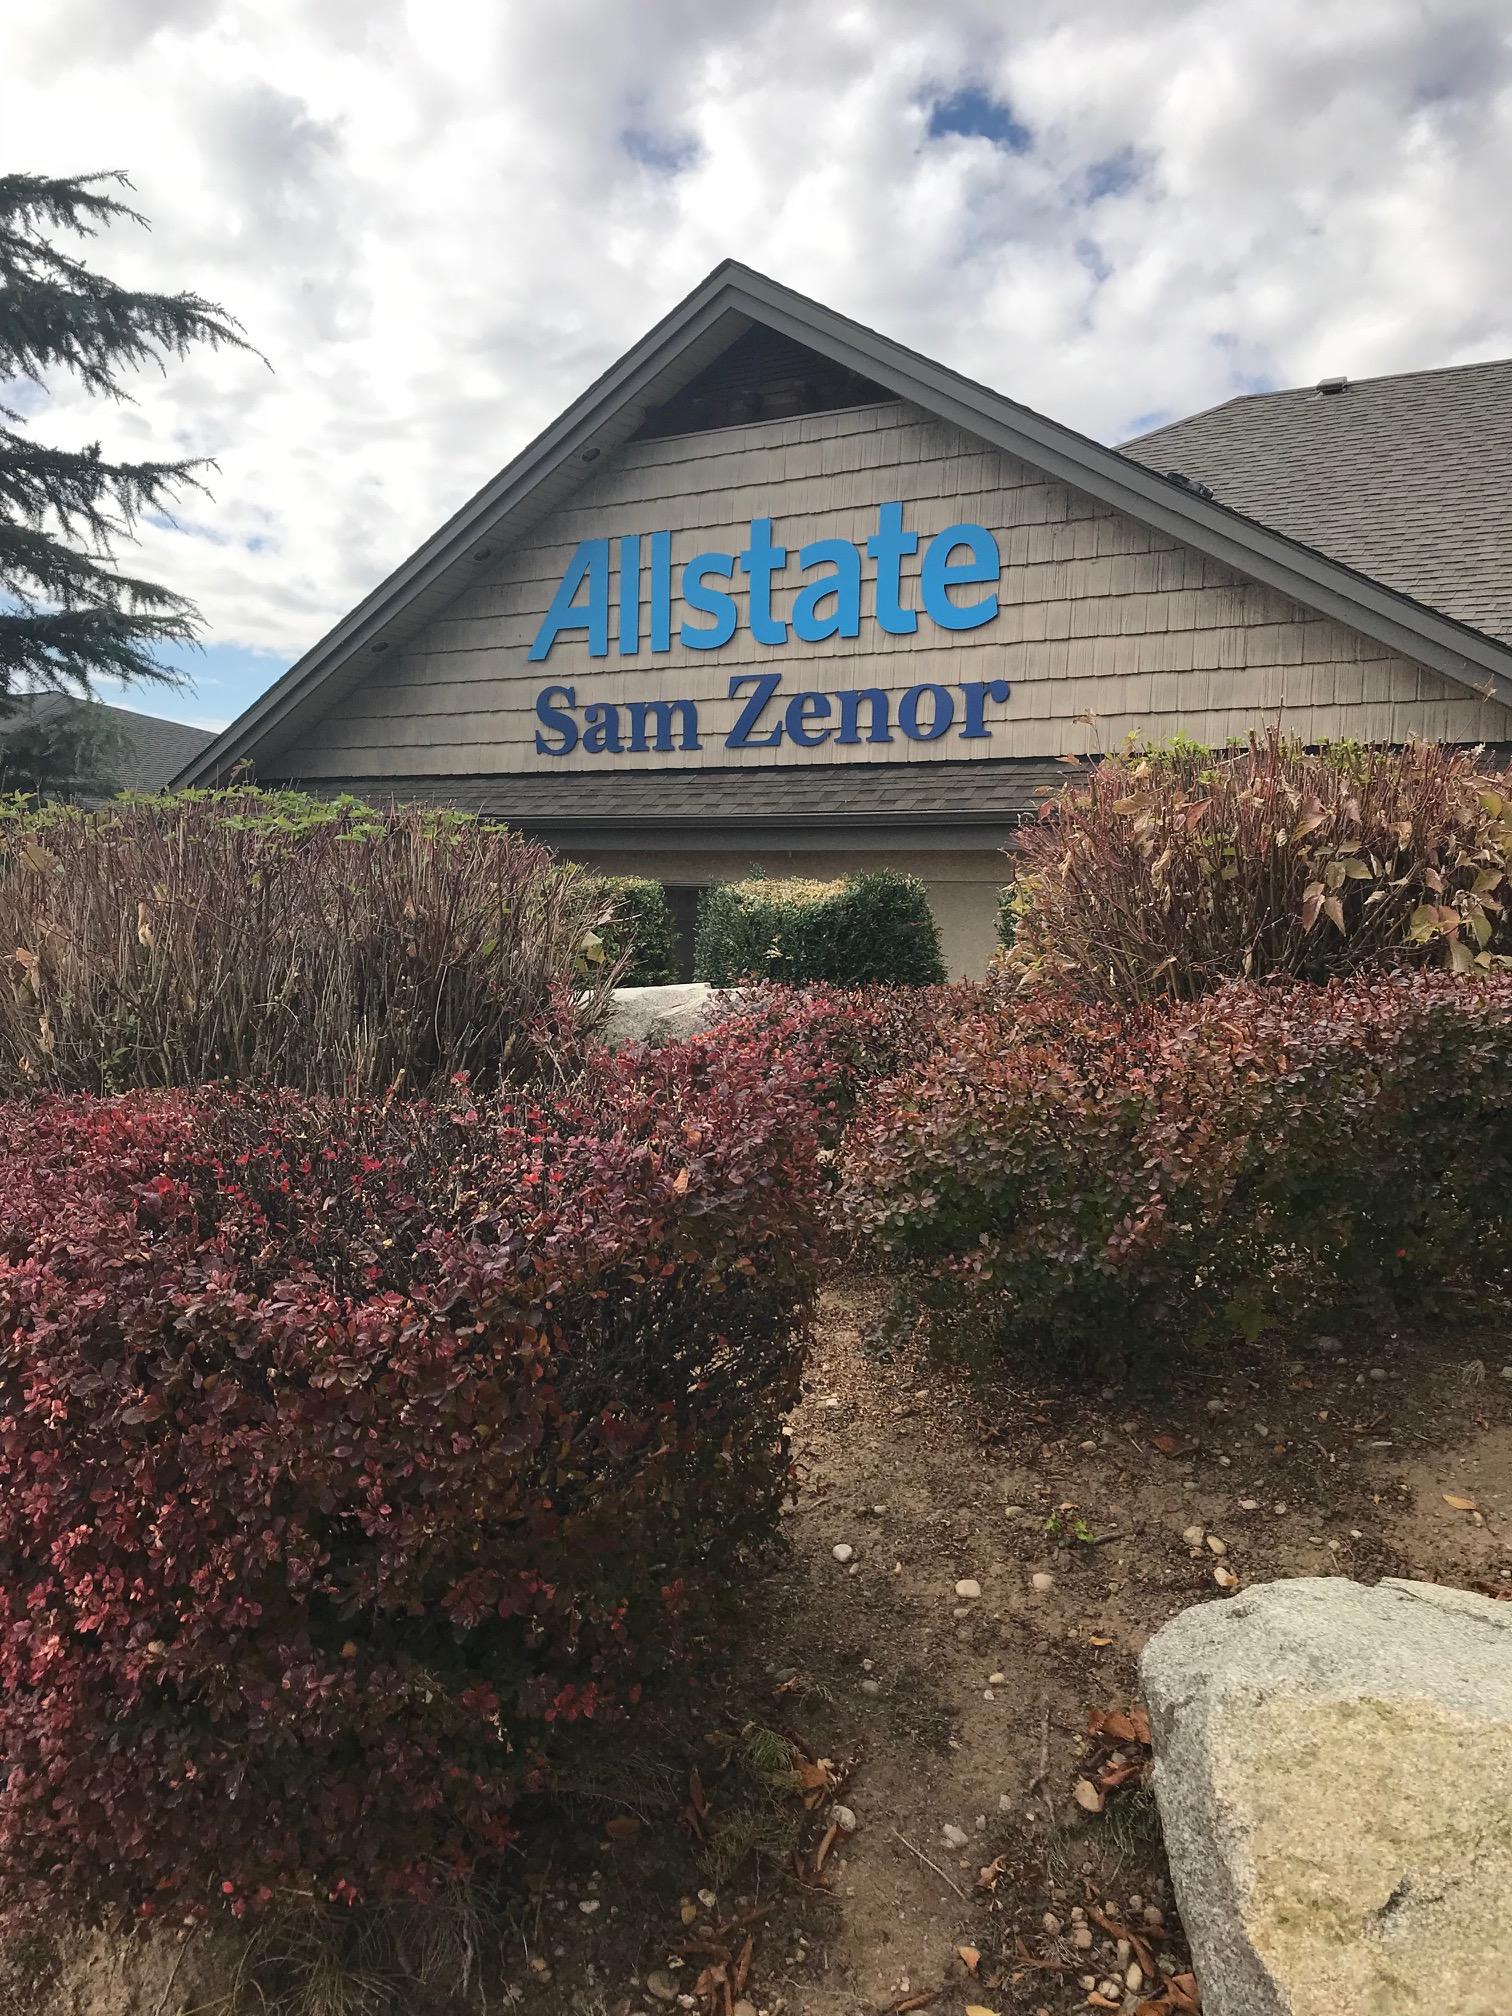 Sam Zenor: Allstate Insurance Photo